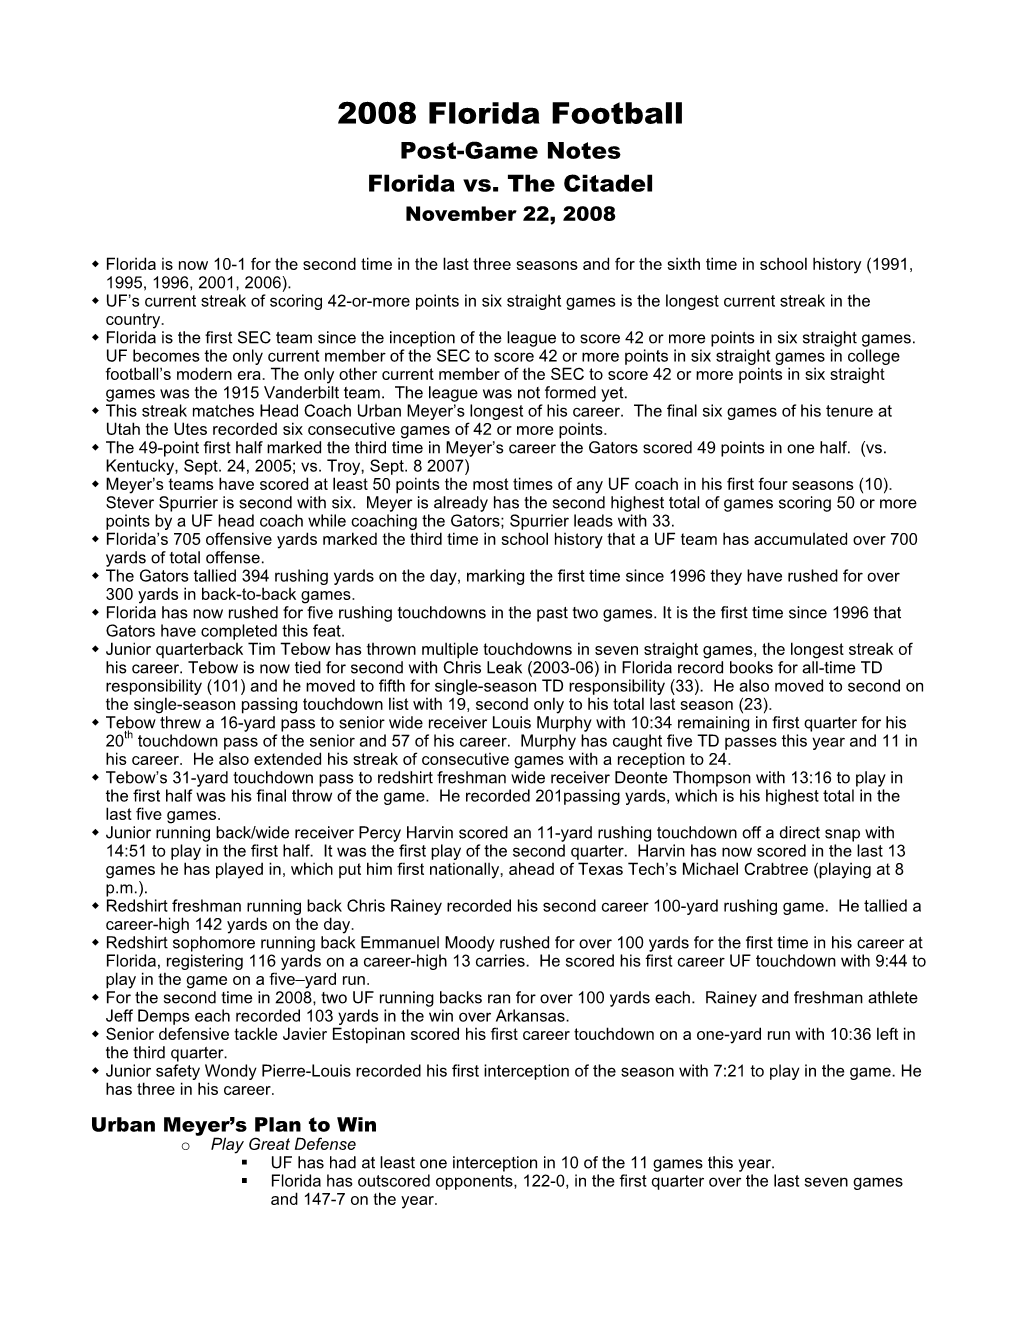 2008 Florida Football Post-Game Notes Florida Vs